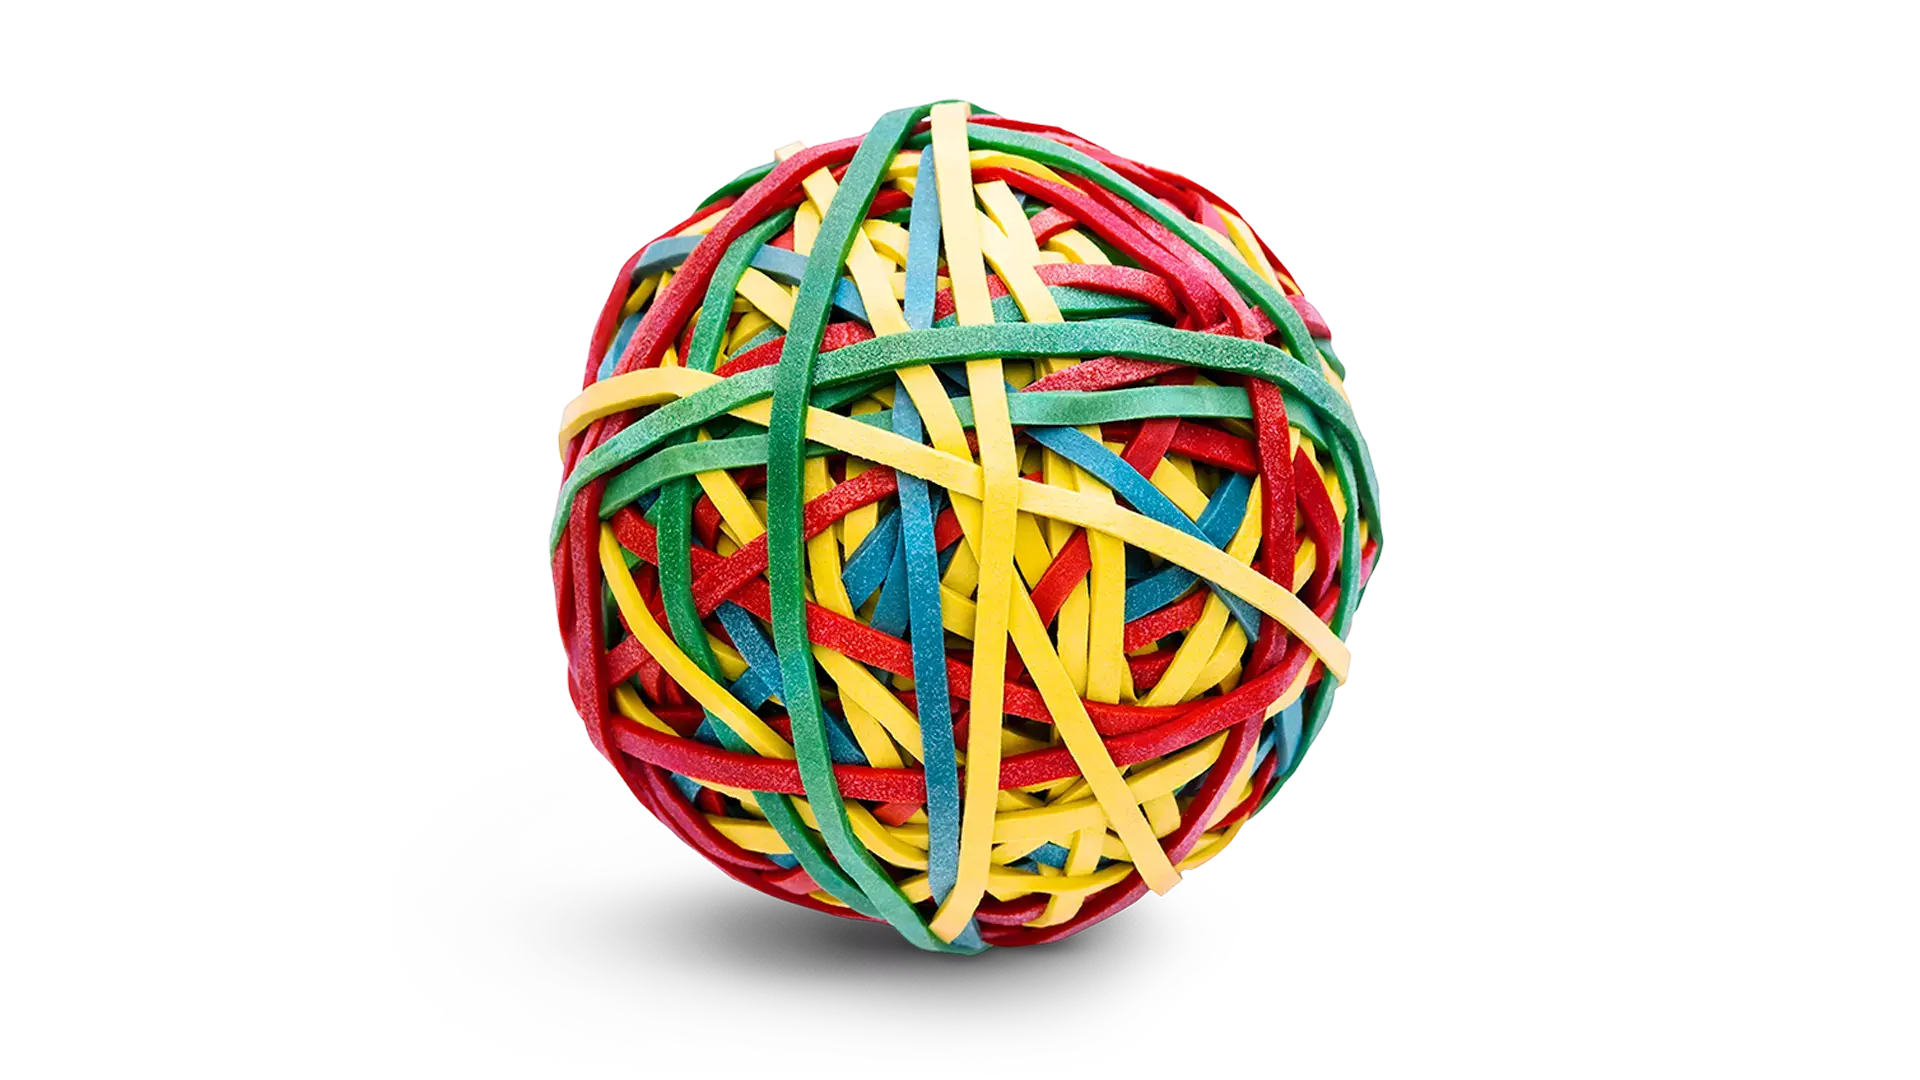 Una pelota formada por bandas elásticas.